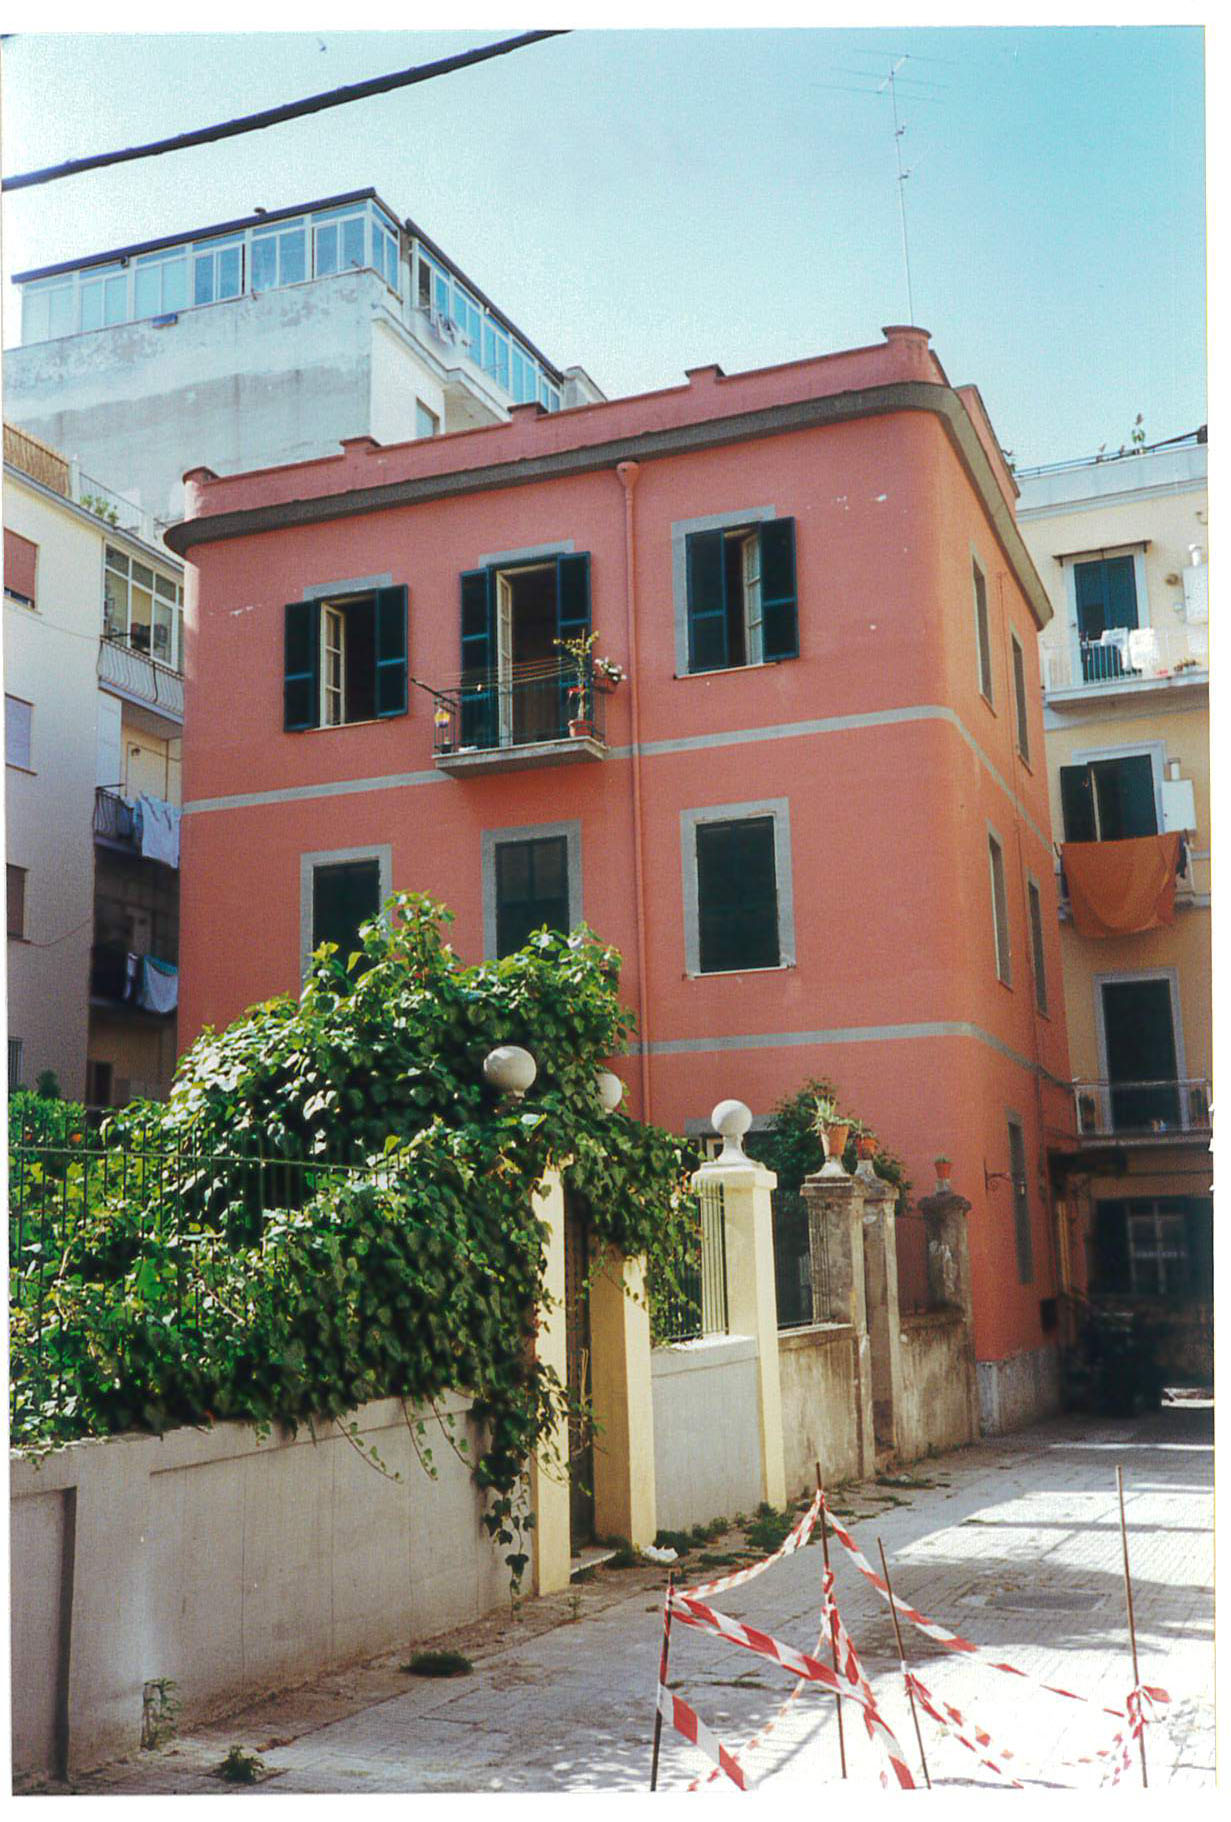 palazzina in via Francesco Solimena, 114 B (palazzina, civico) - Napoli (NA) 